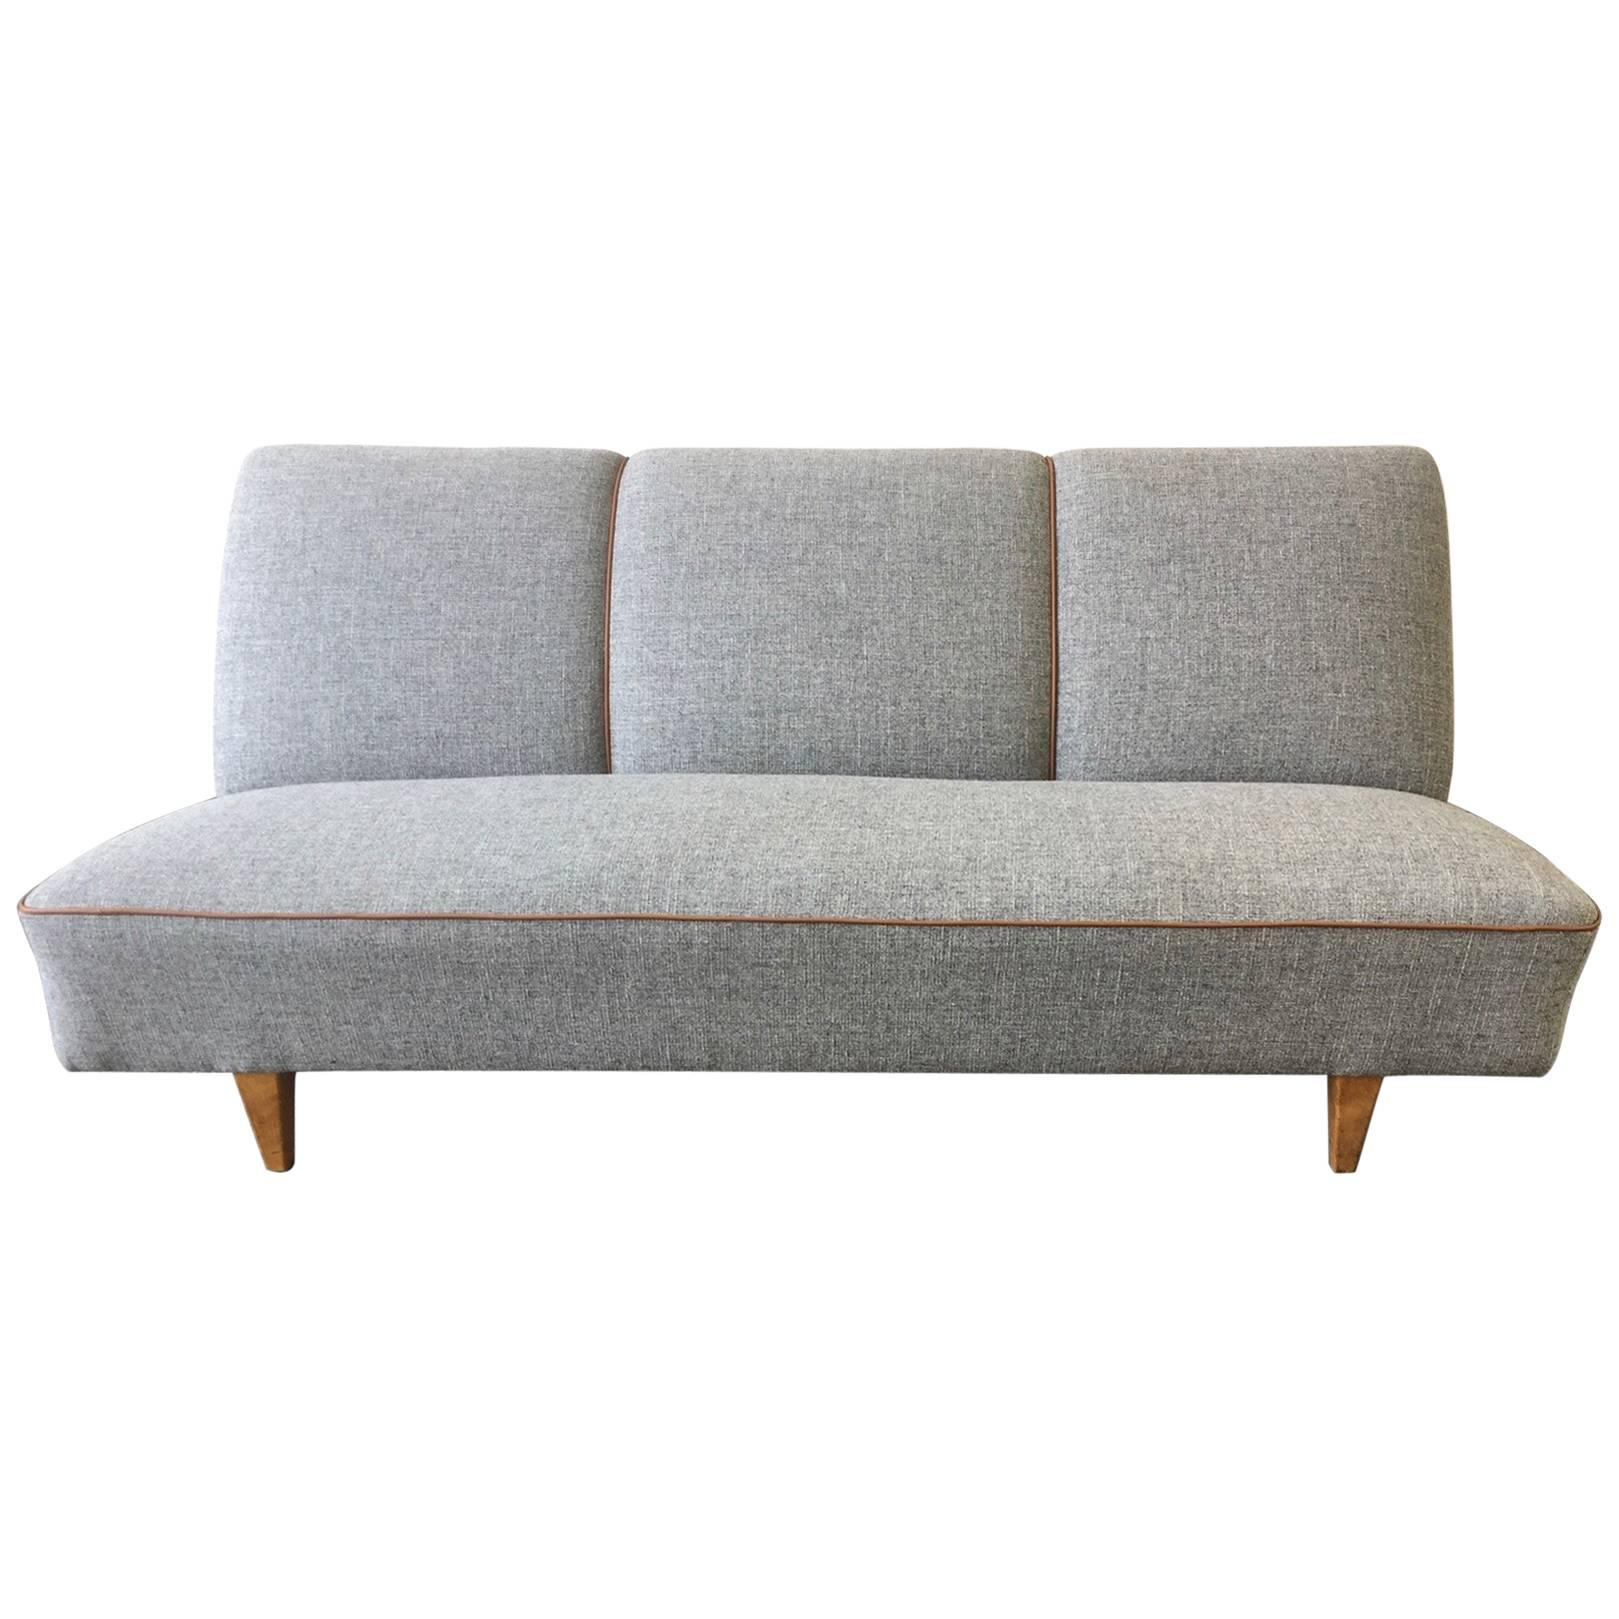 Very Rare Bruno Mathsson Sofa in Perfect Condition For Sale